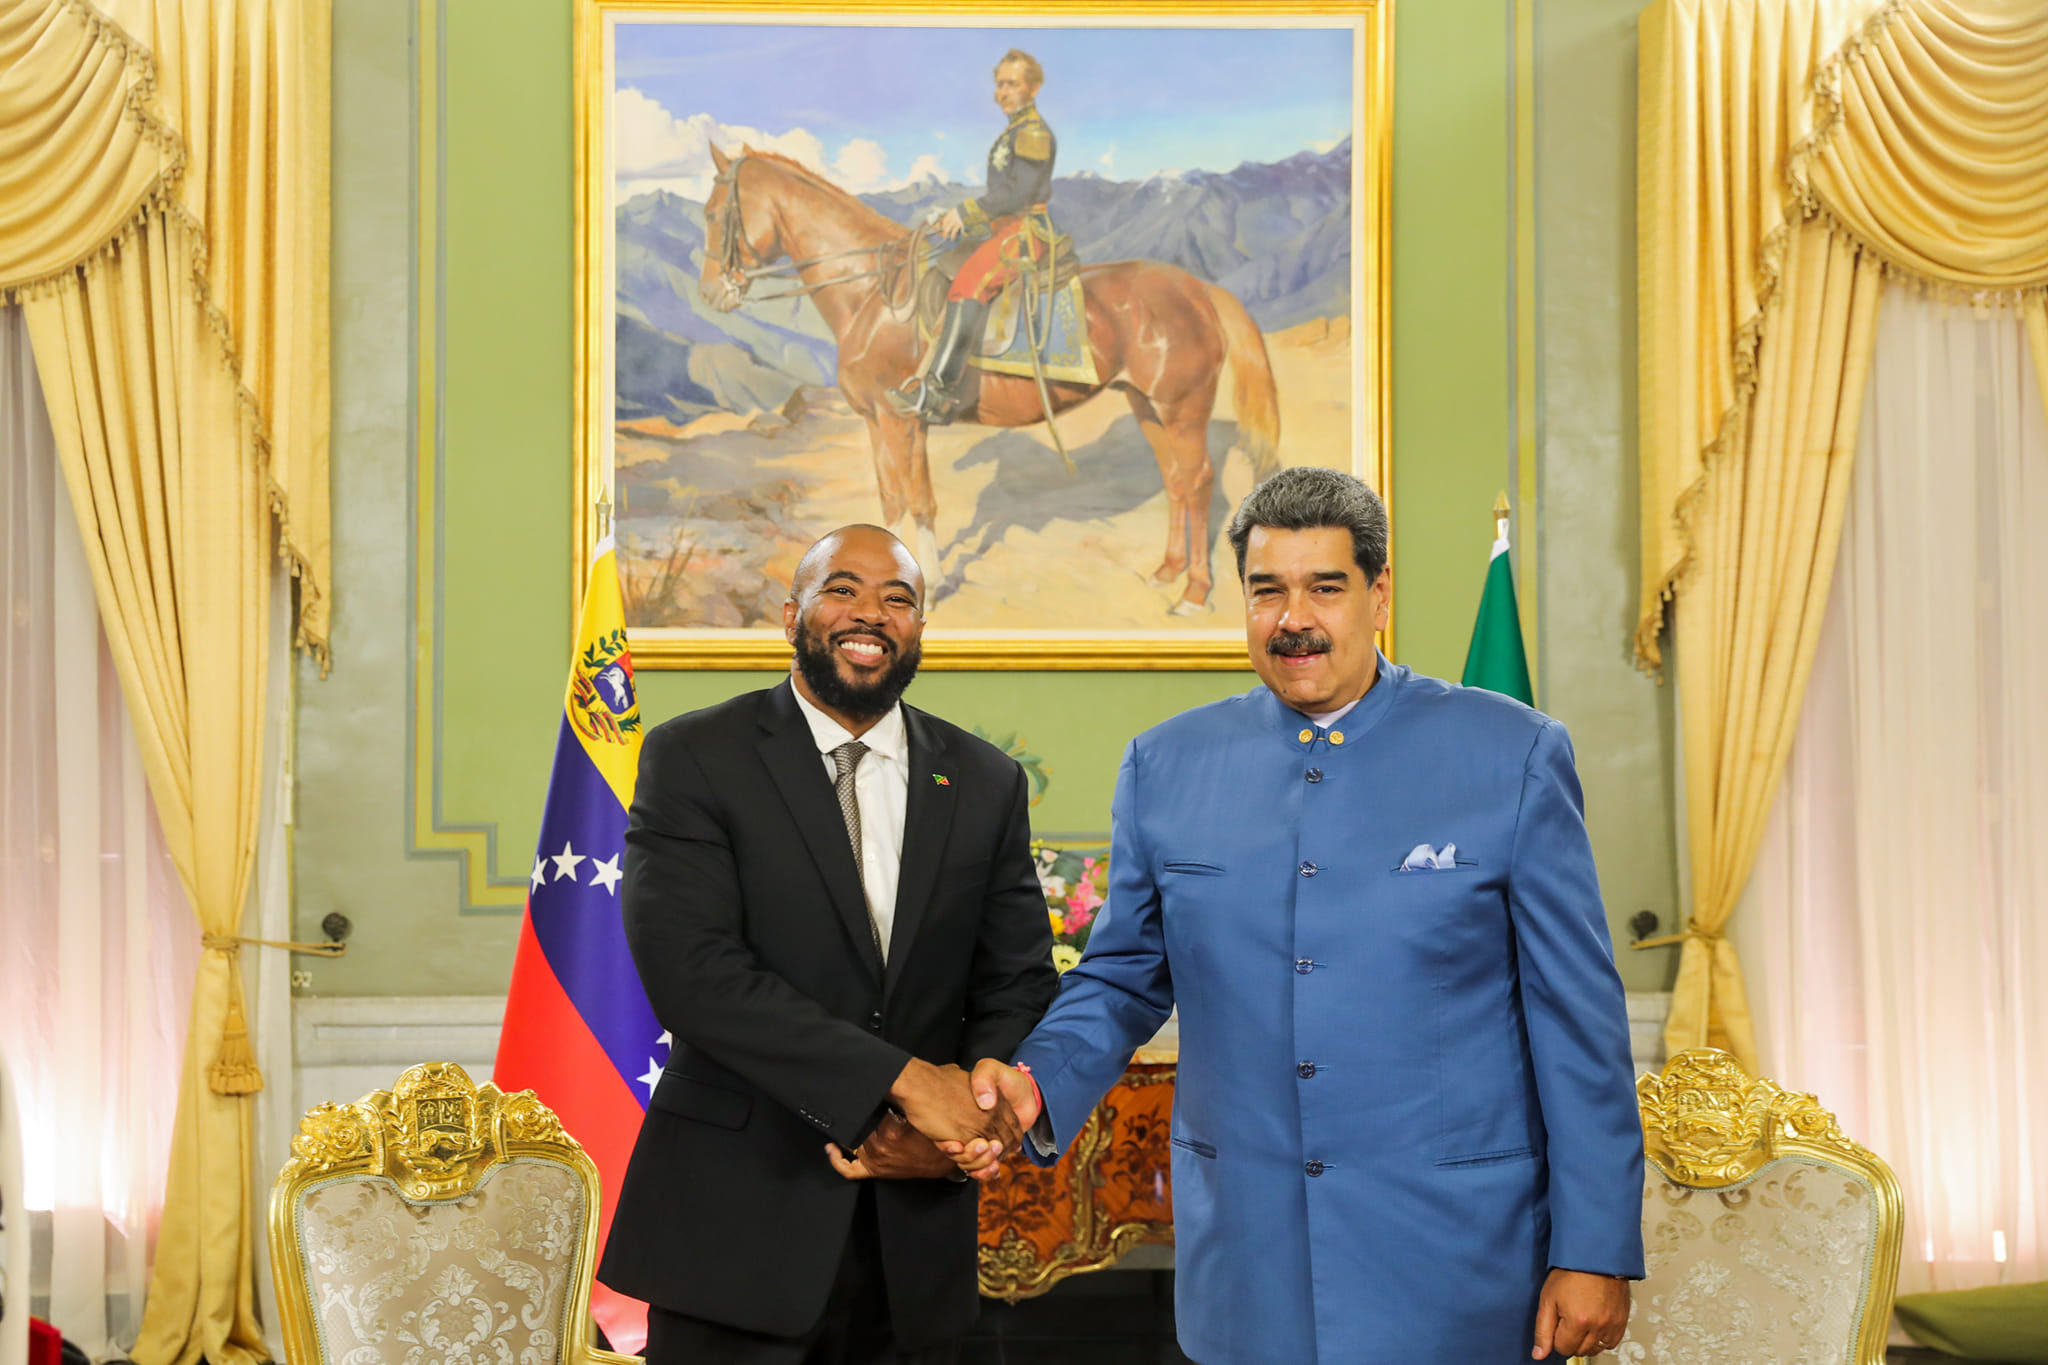 H.E Dr. Norgen Wilson Accredited as the Non-Resident Ambassador to the Bolivarian Republic of Venezuela